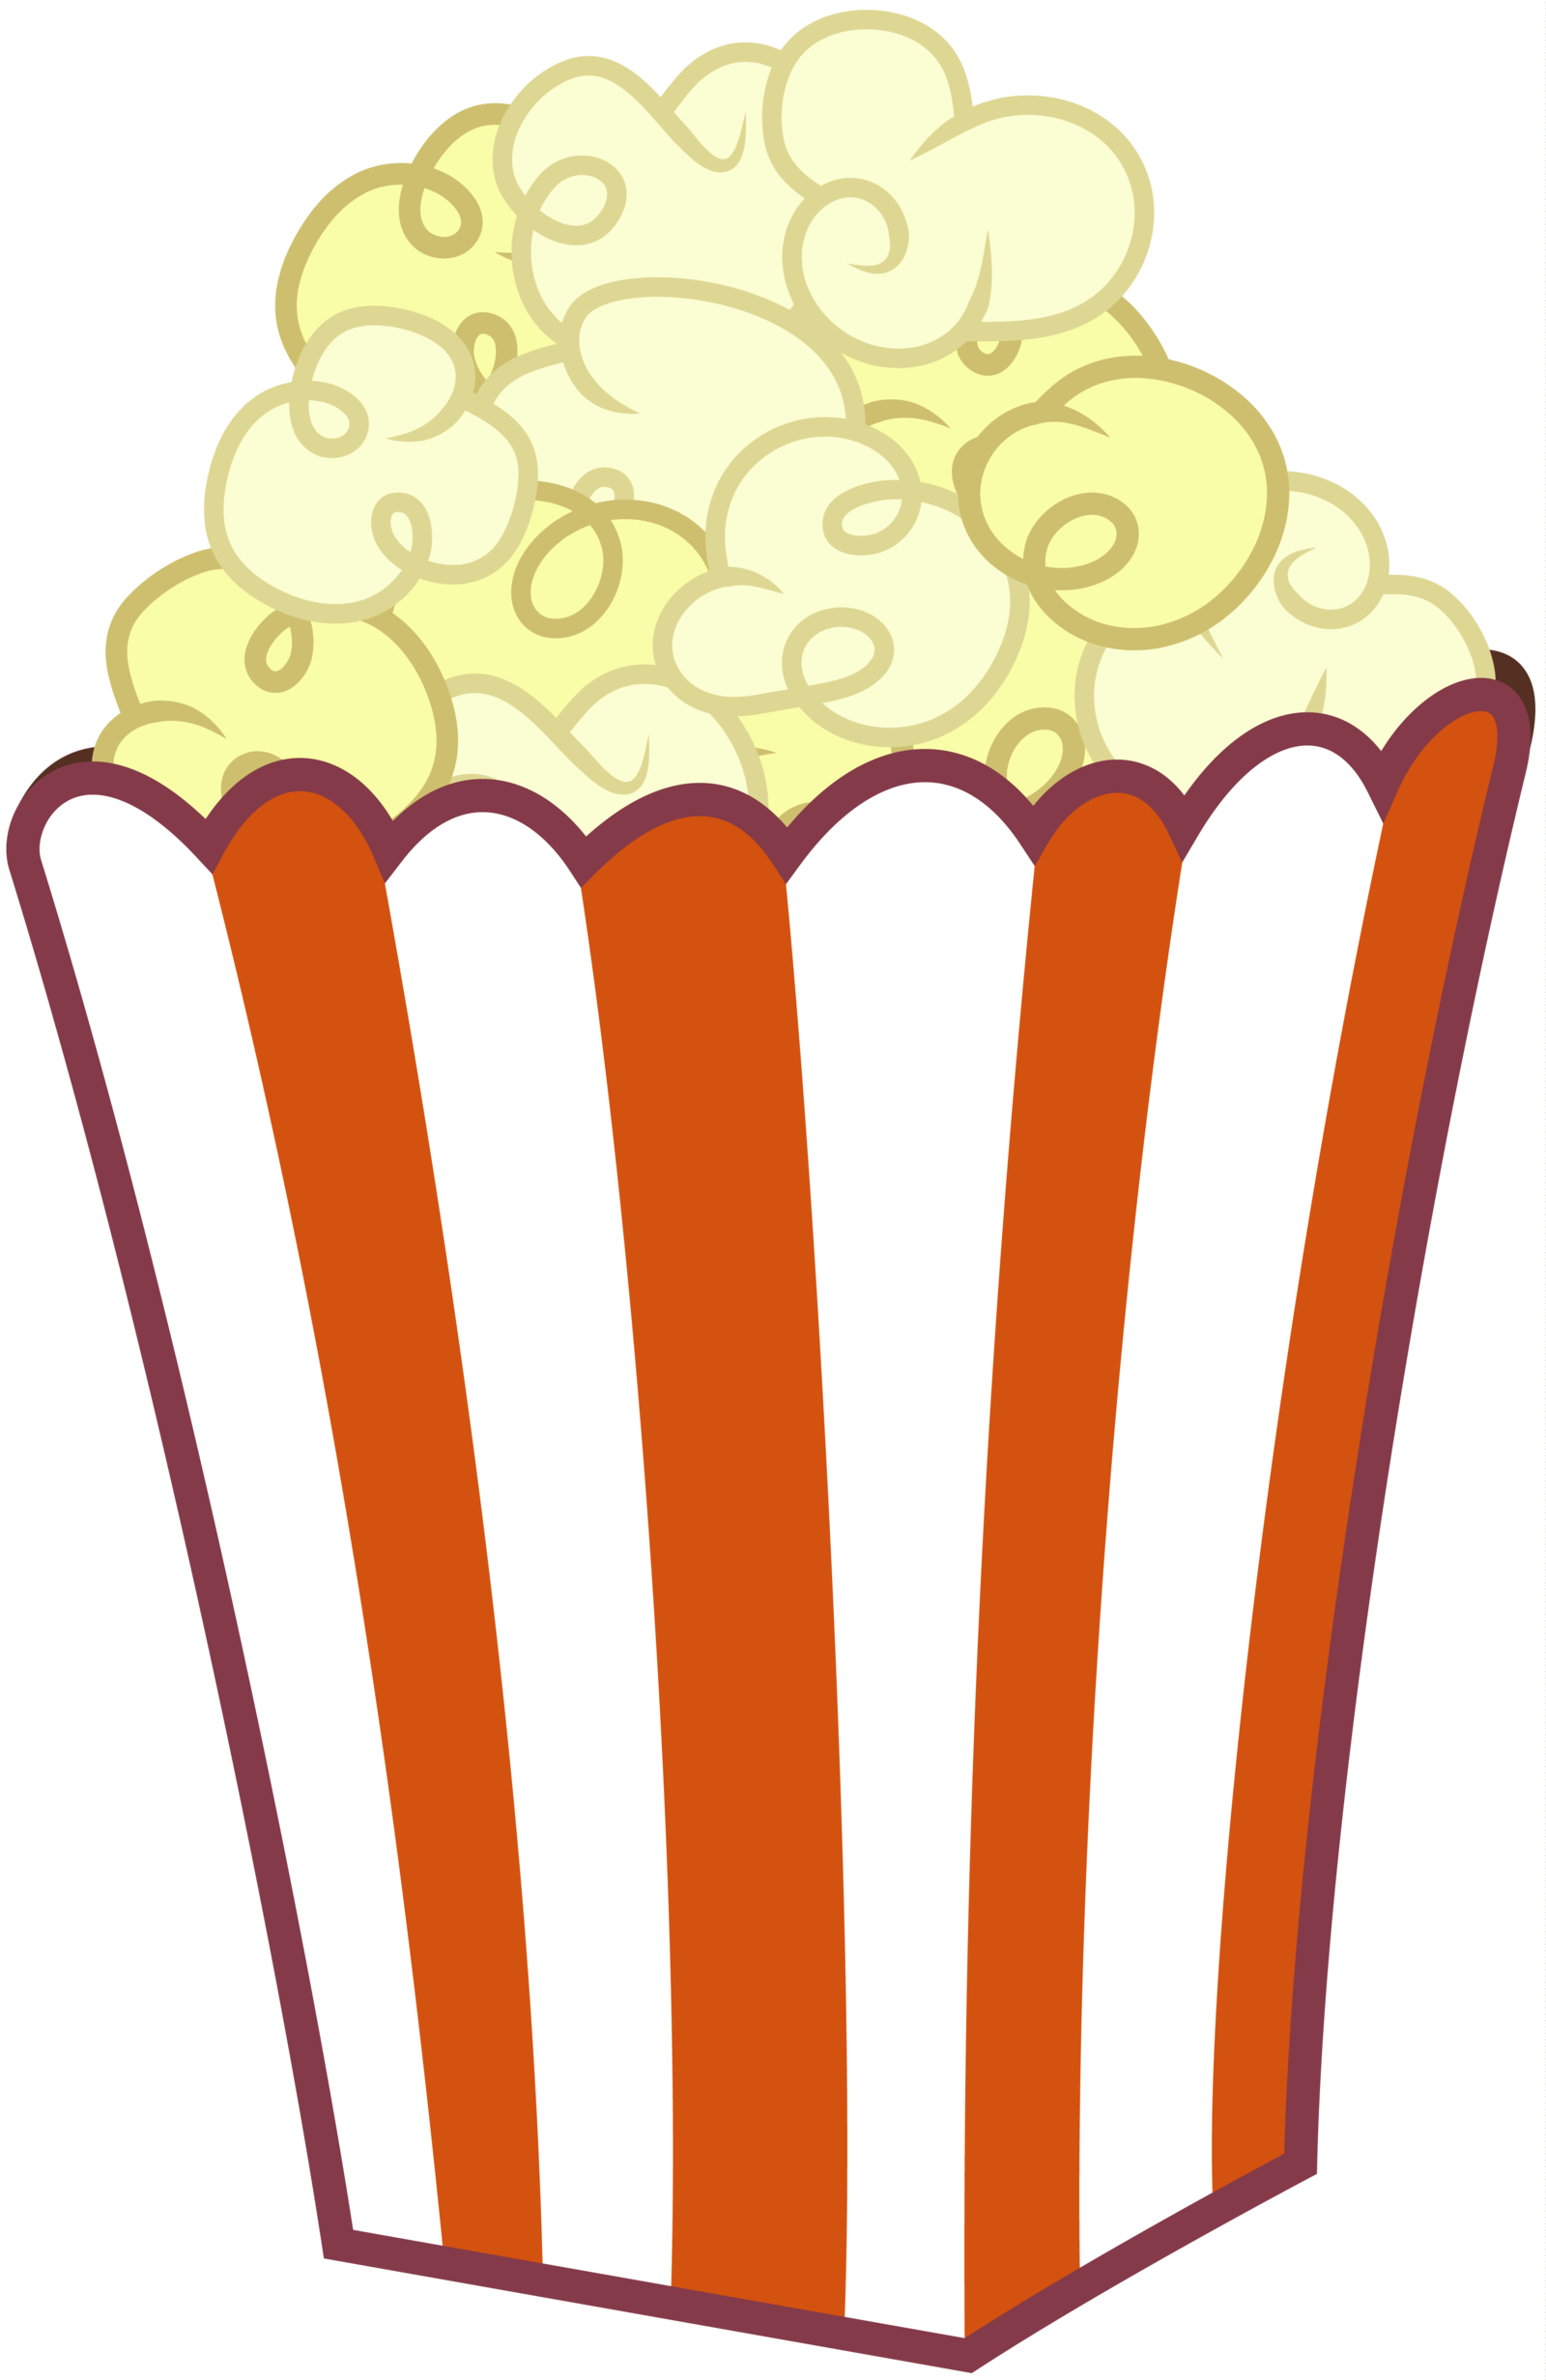 Popcorn images free clip art